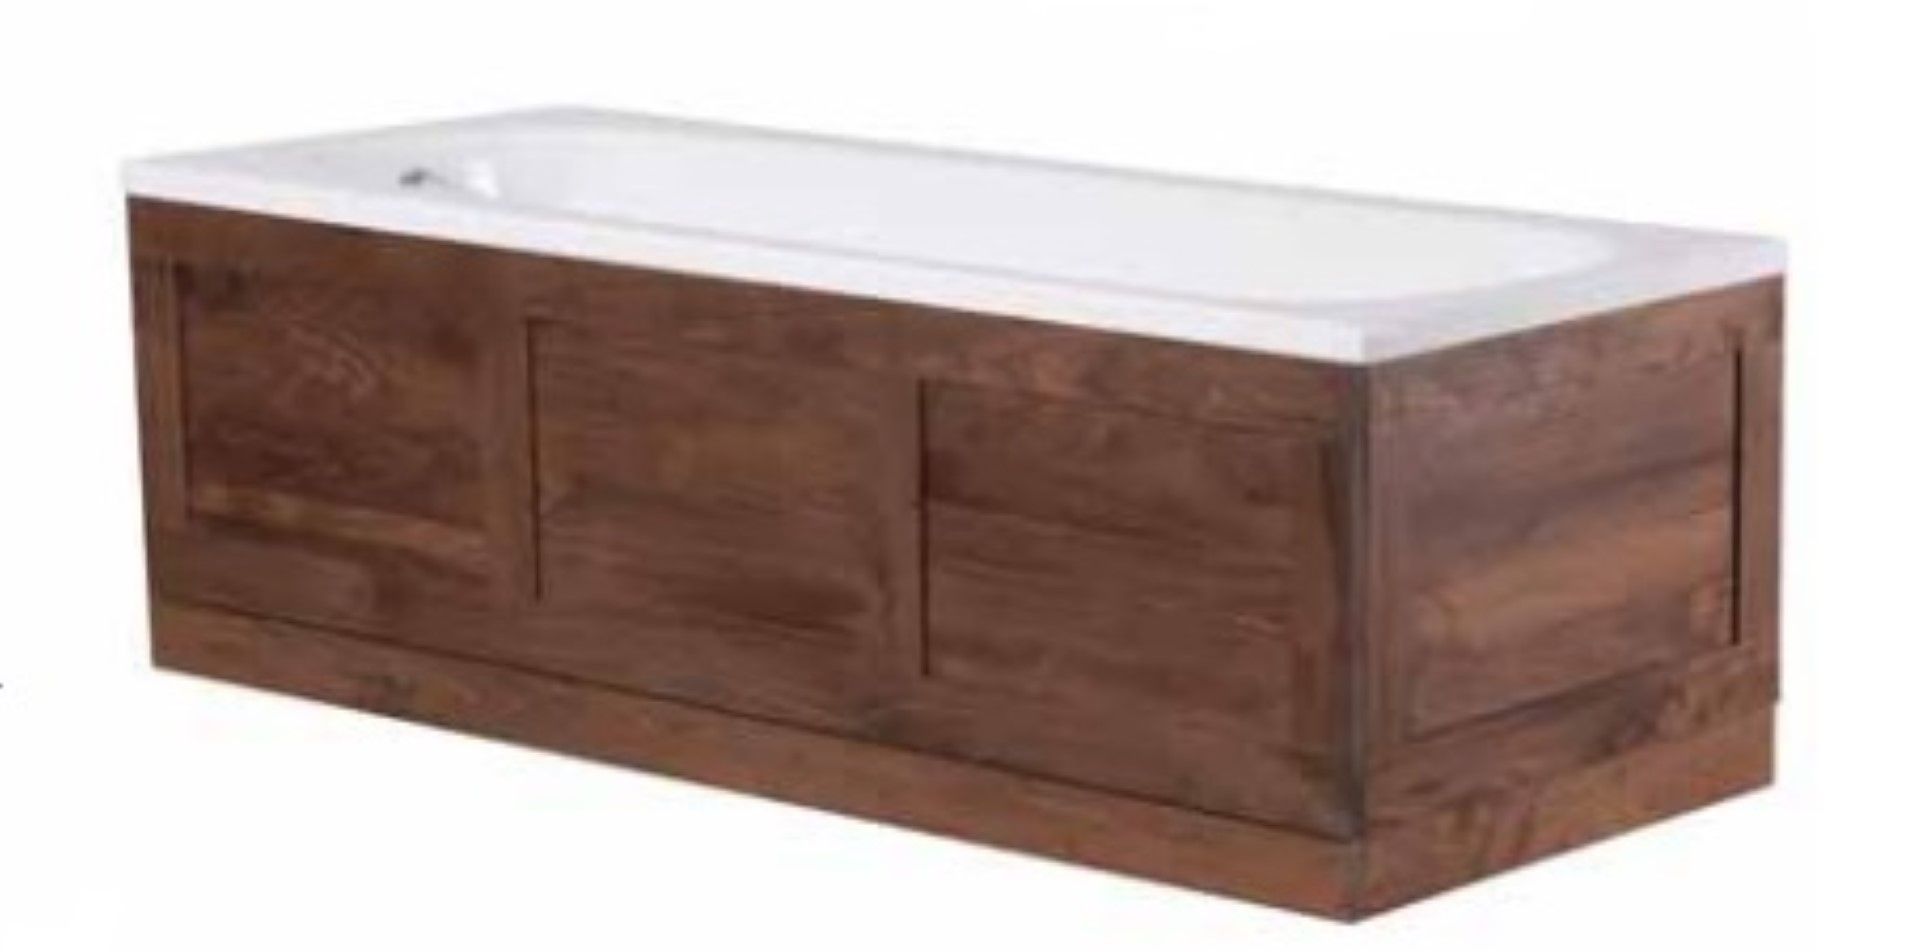 1 x Stonearth 1700mm Bath Front Panel Set - American Solid Walnut - Unused Stock - Original RRP £798